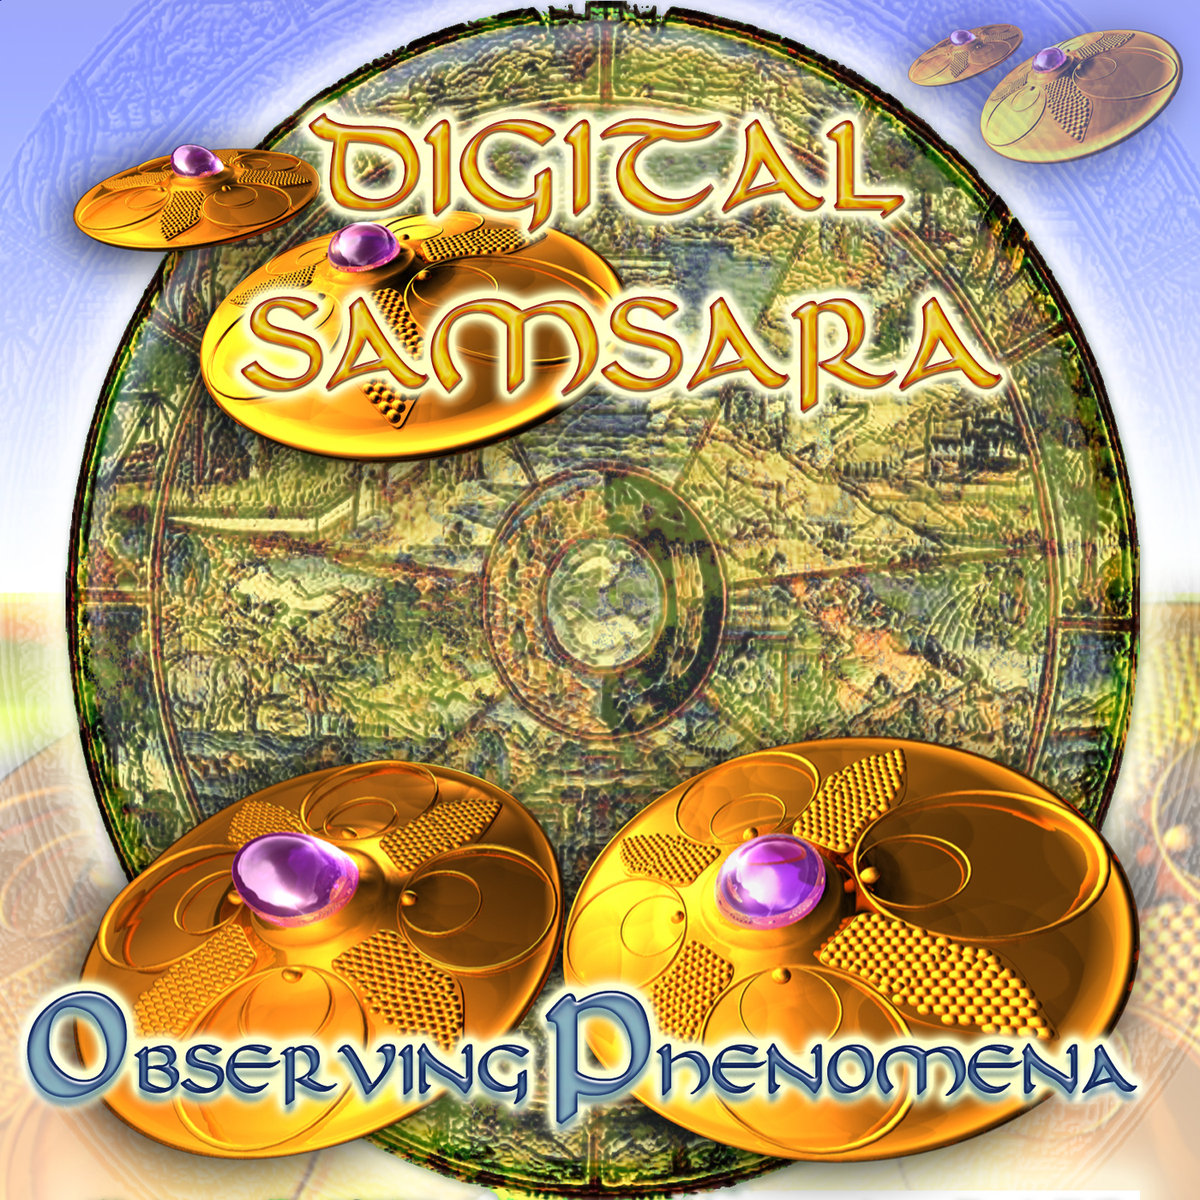 Digital Samsara - Stop The Earth @ 'Observing Phenomena' album (electronic, goa)